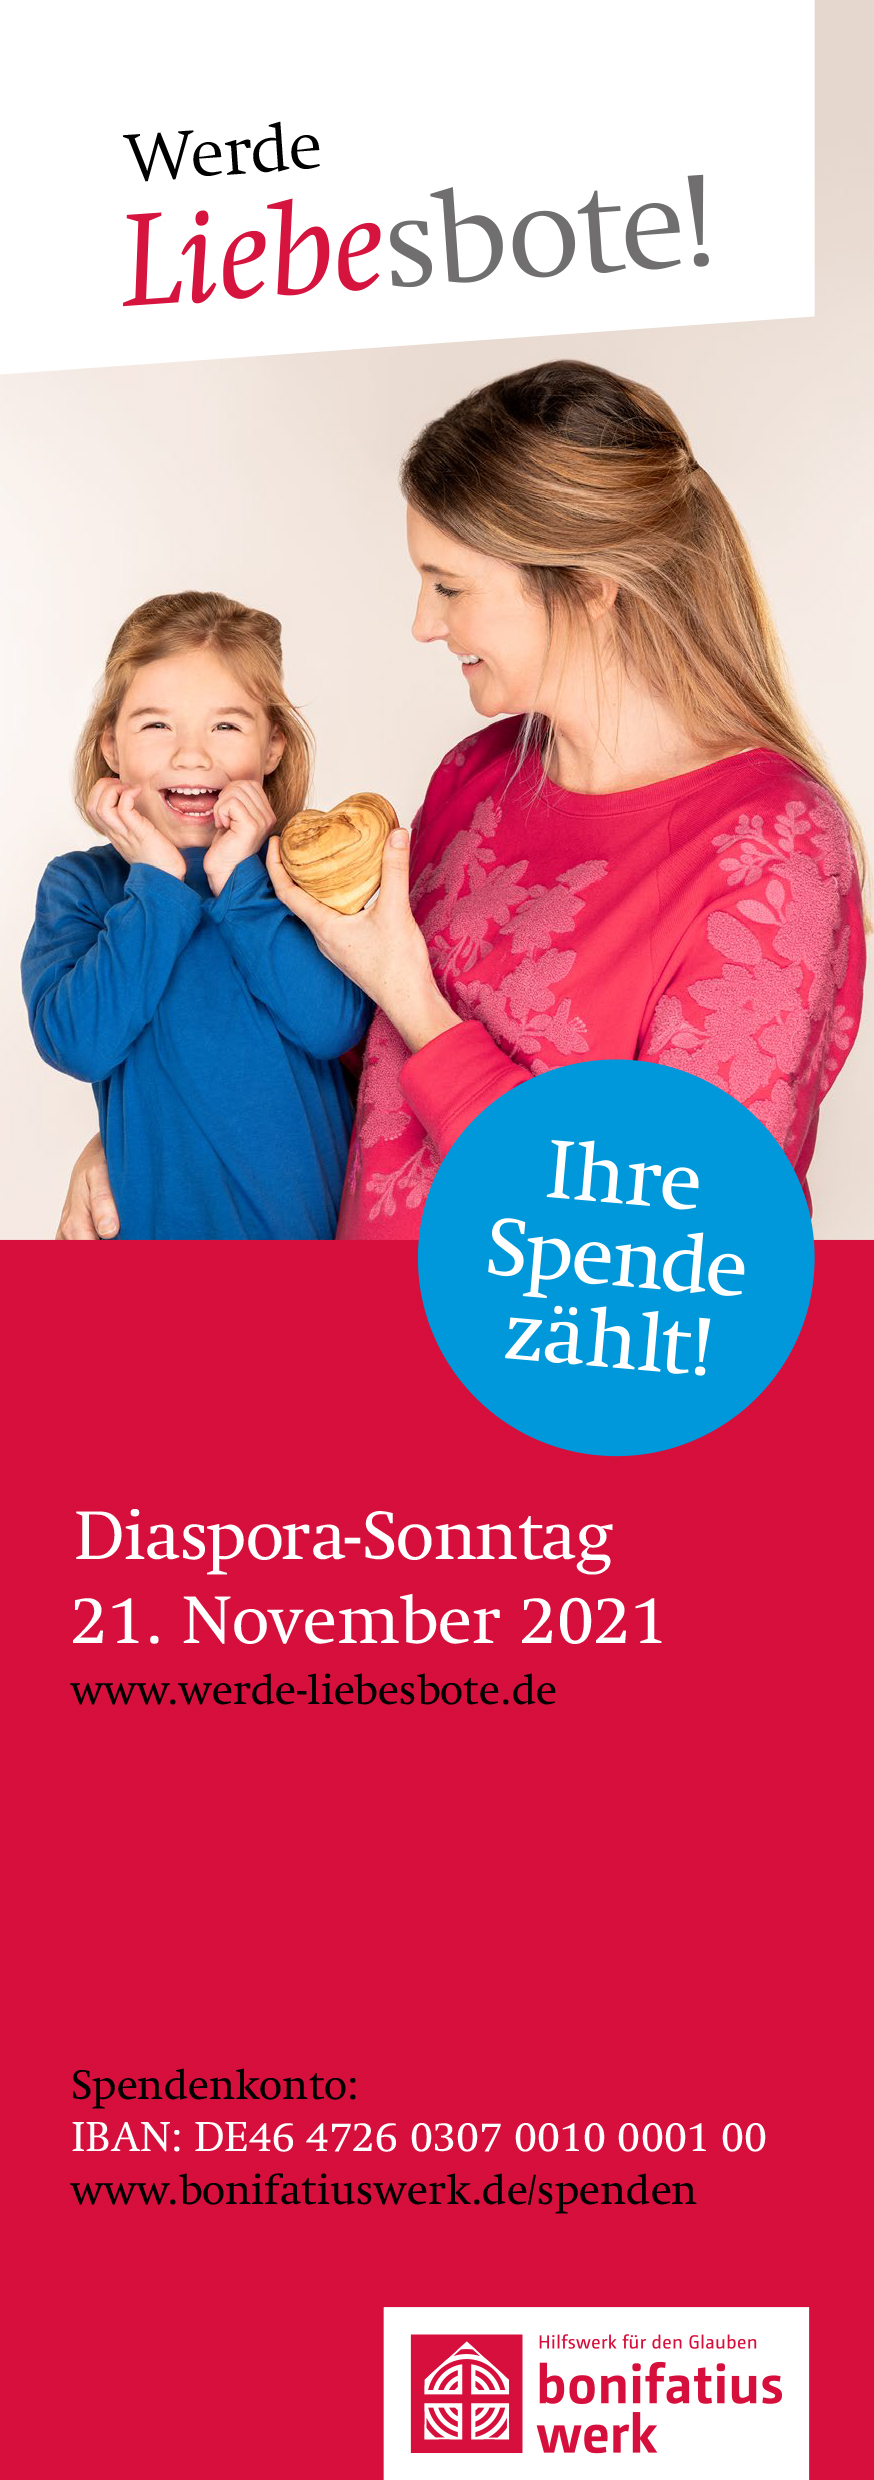 Diaspora Sonntag Aktionsplakat 2021 (c) Bonifatiuswerk